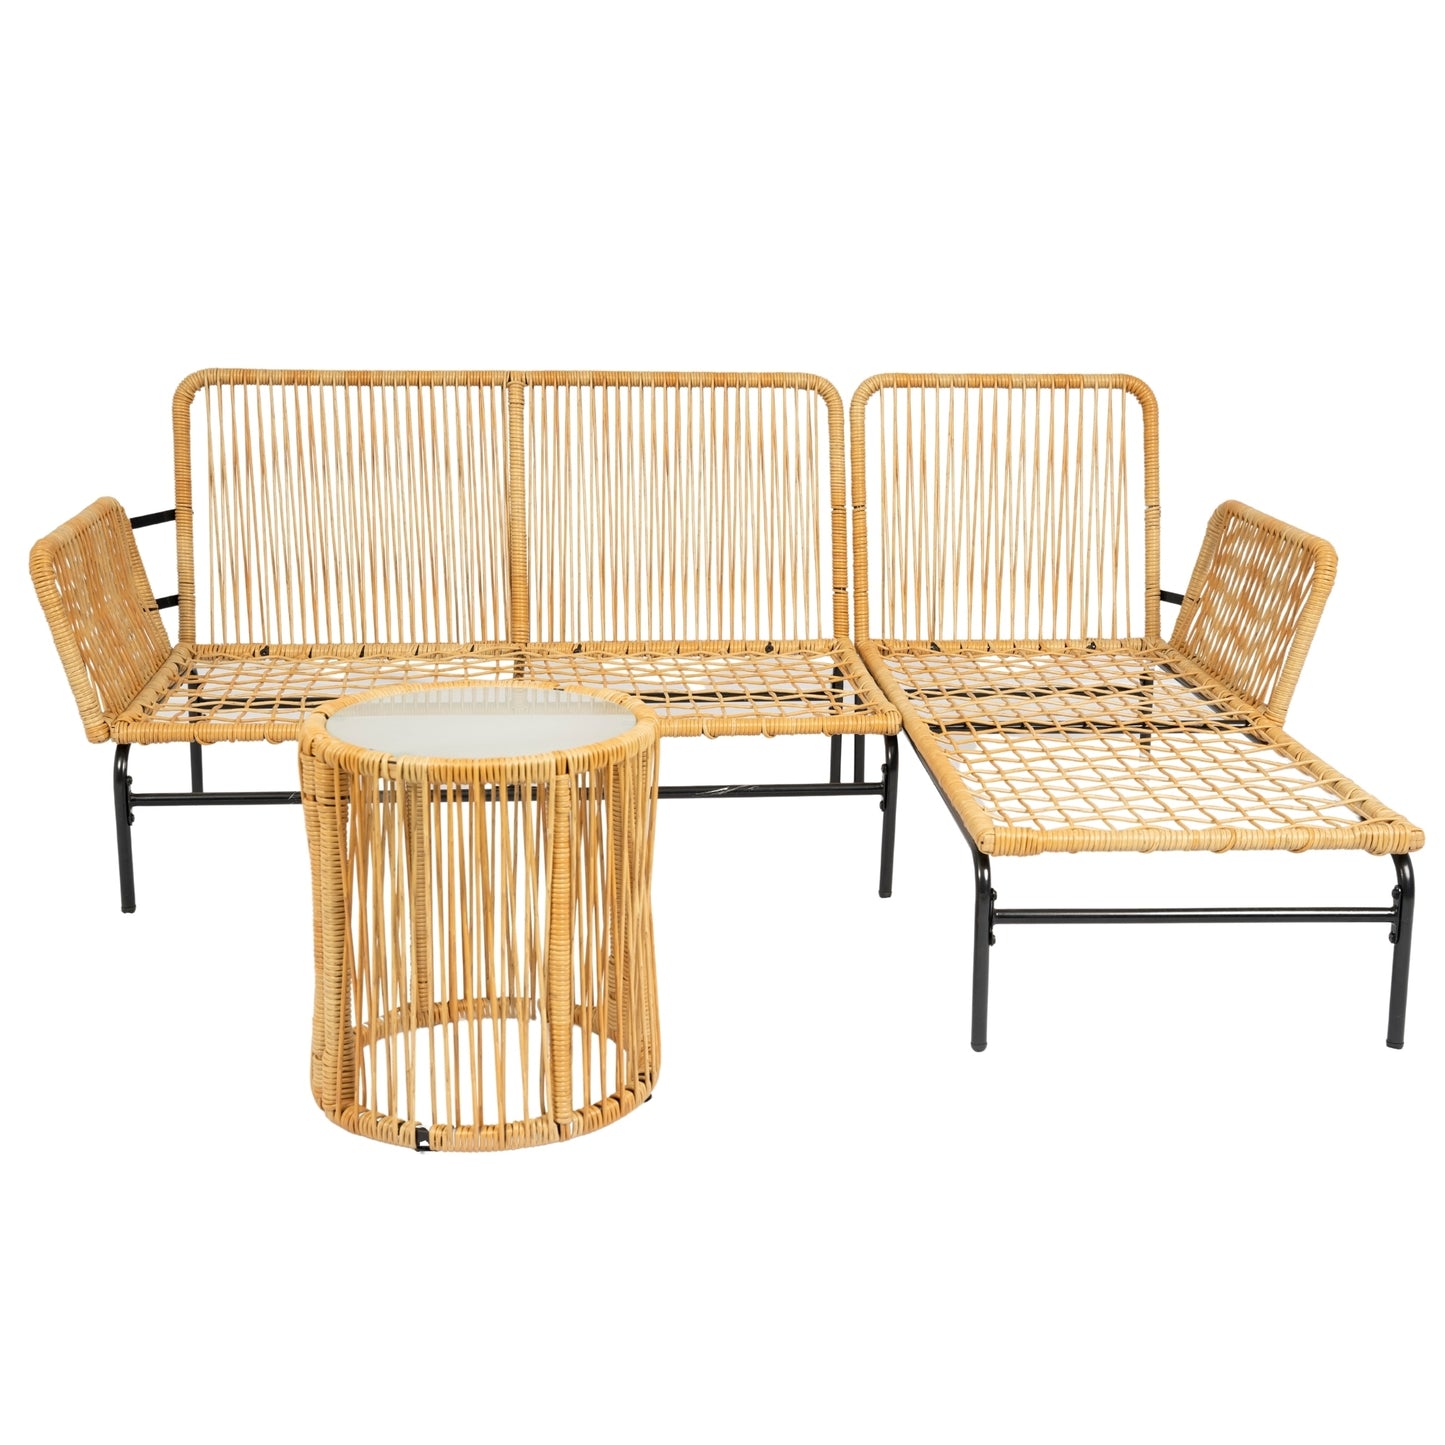 3 Pieces Outdoor Patio Wicker Furniture Sets